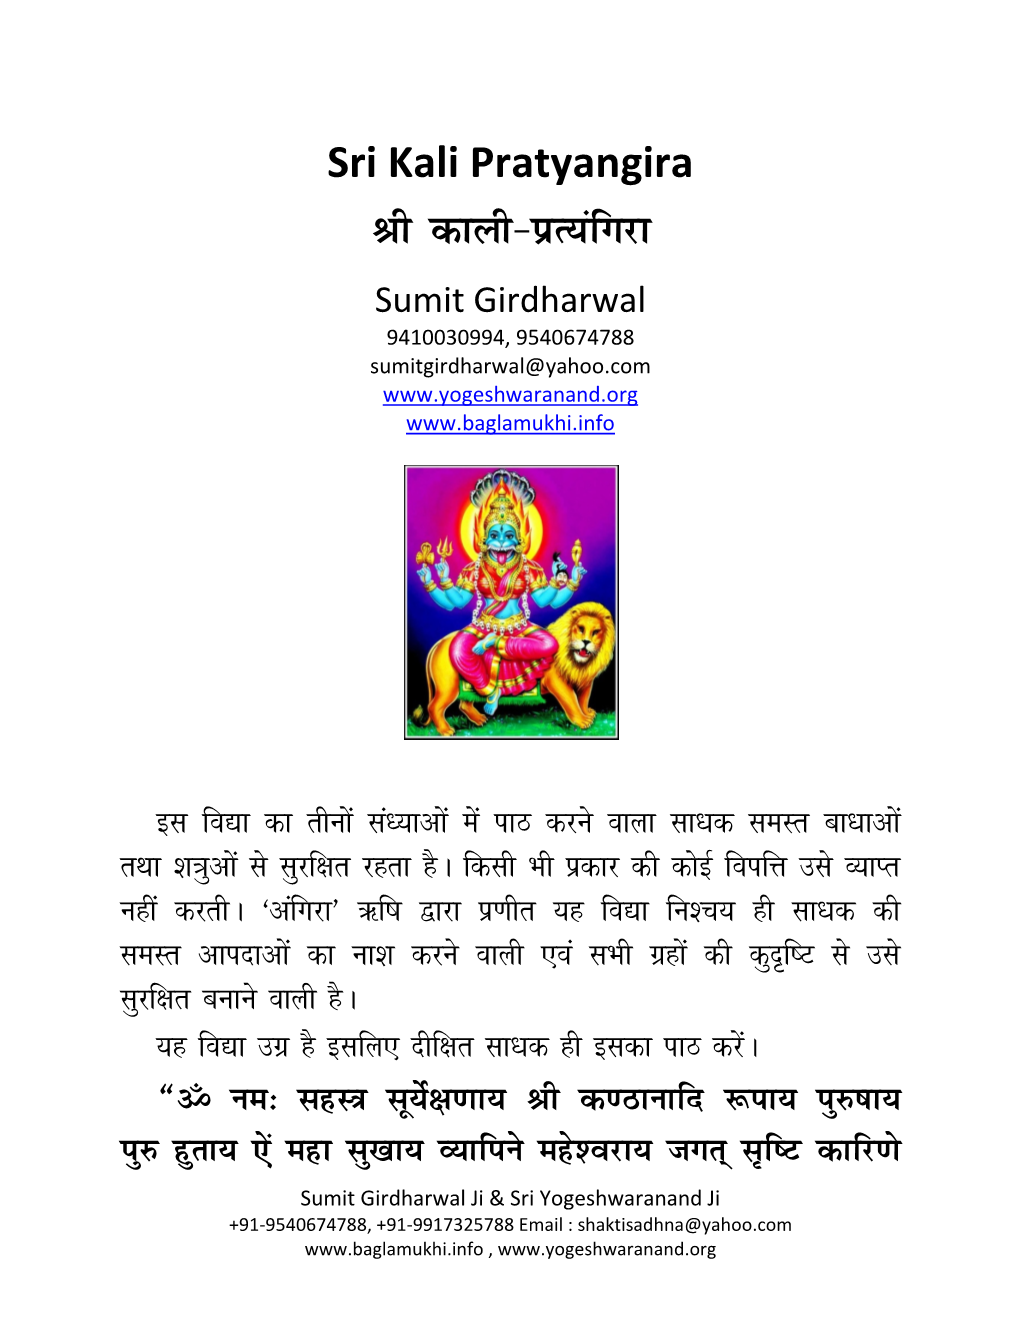 Sri Kali Pratyangira Jh Dkyhafxjk Sumit Girdharwal 9410030994, 9540674788 Sumitgirdharwal@Yahoo.Com